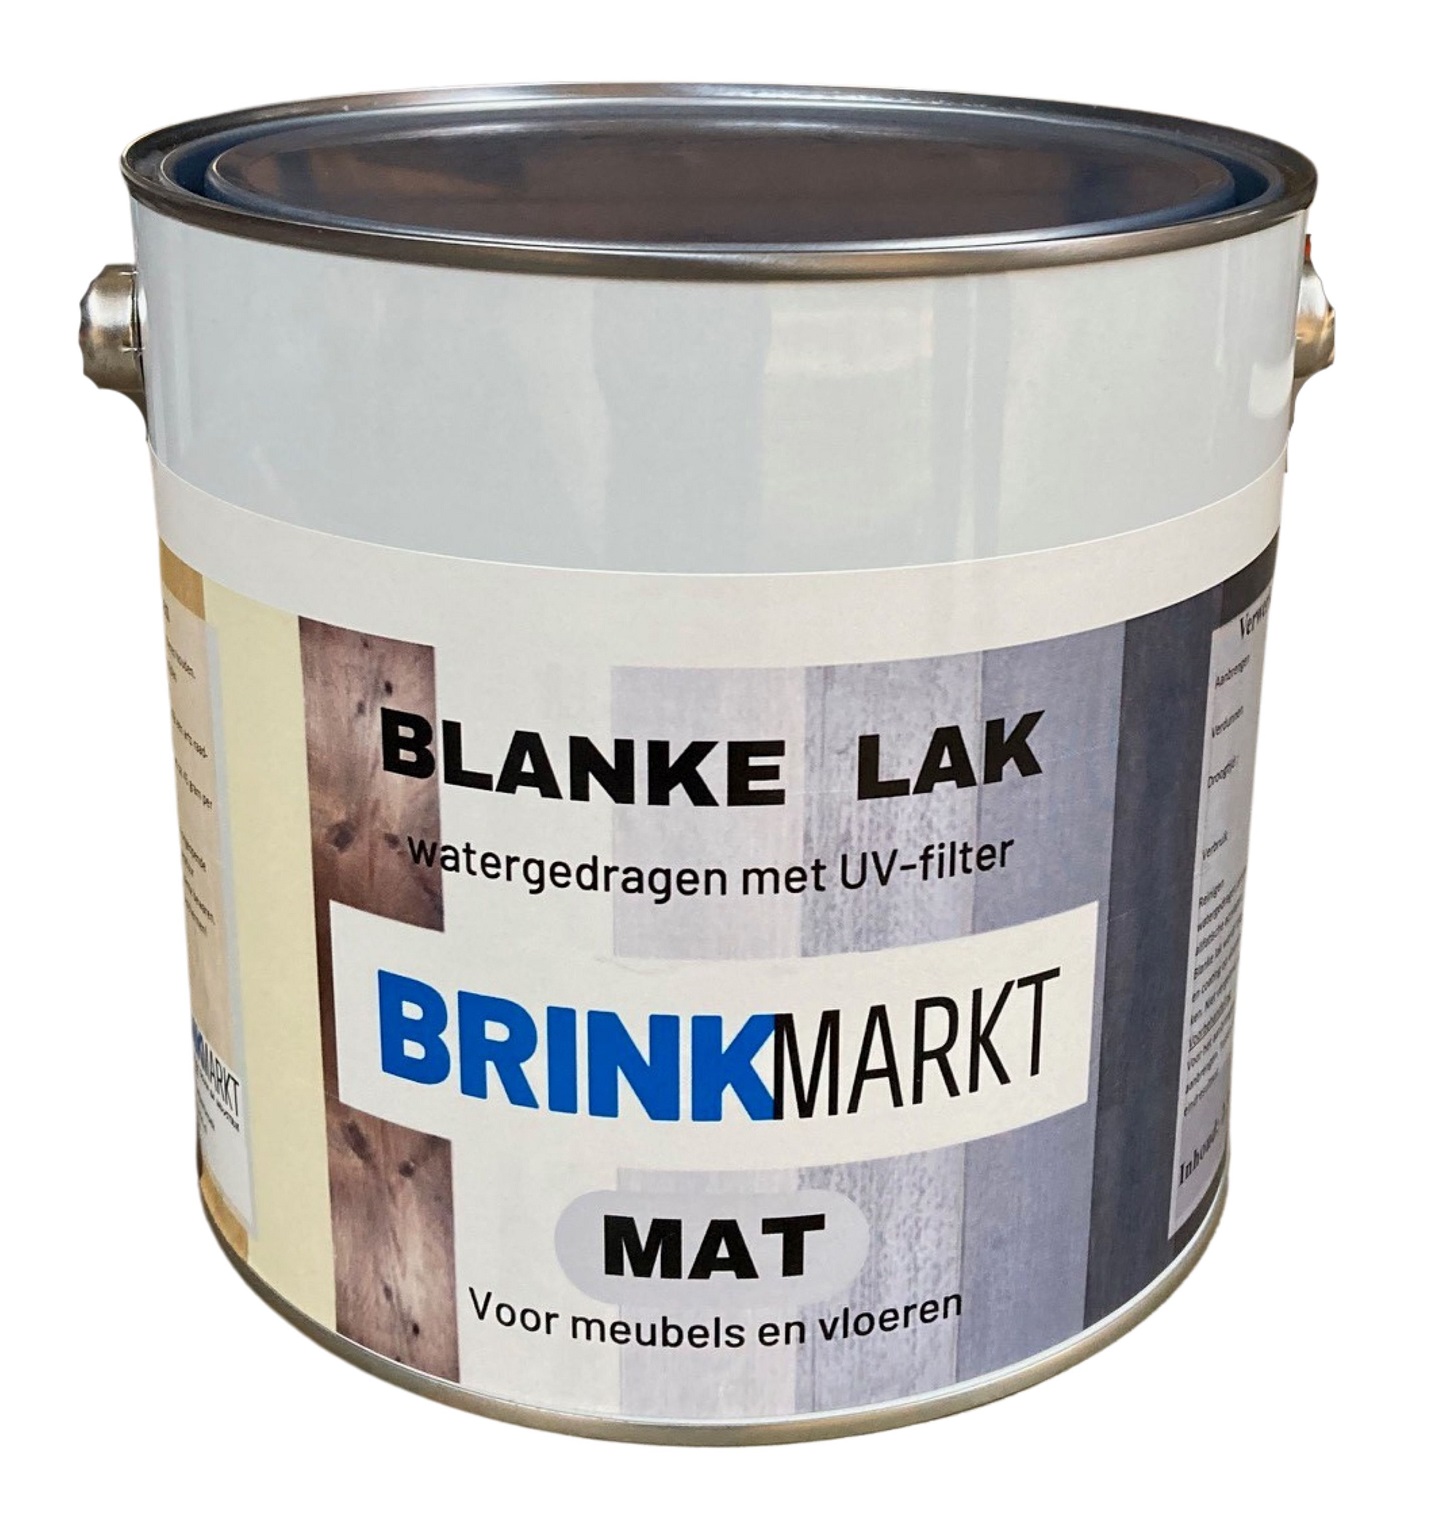 BM Blanke lak MAT water gedragen 2,5 Liter met UV-filter-9509993455671